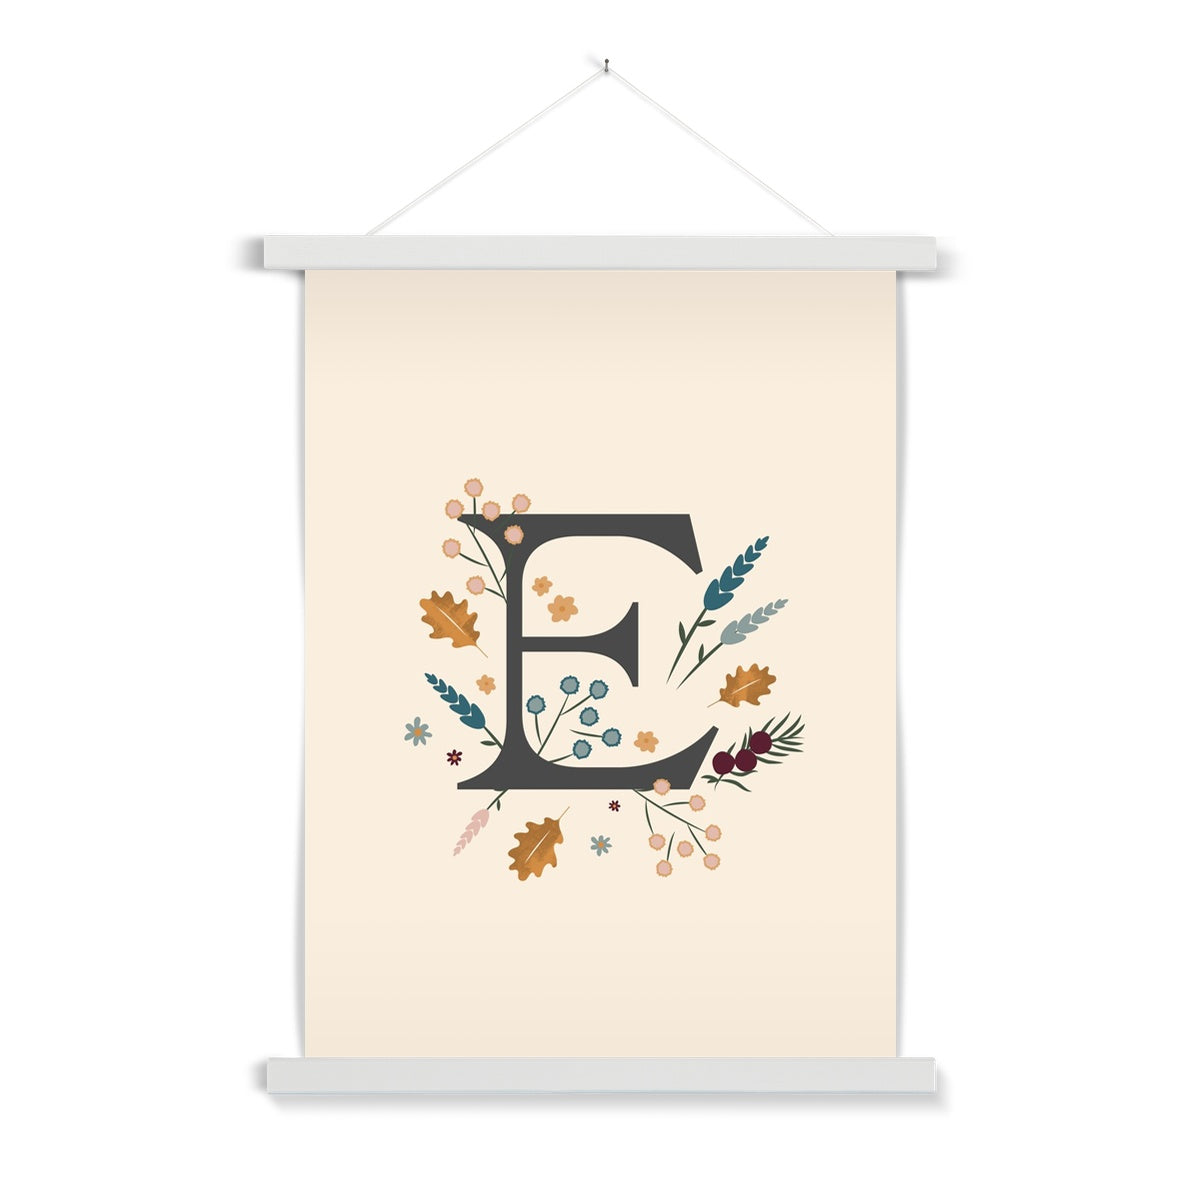 Initial Letter 'E' Woodlands Fine Art Print with Hanger